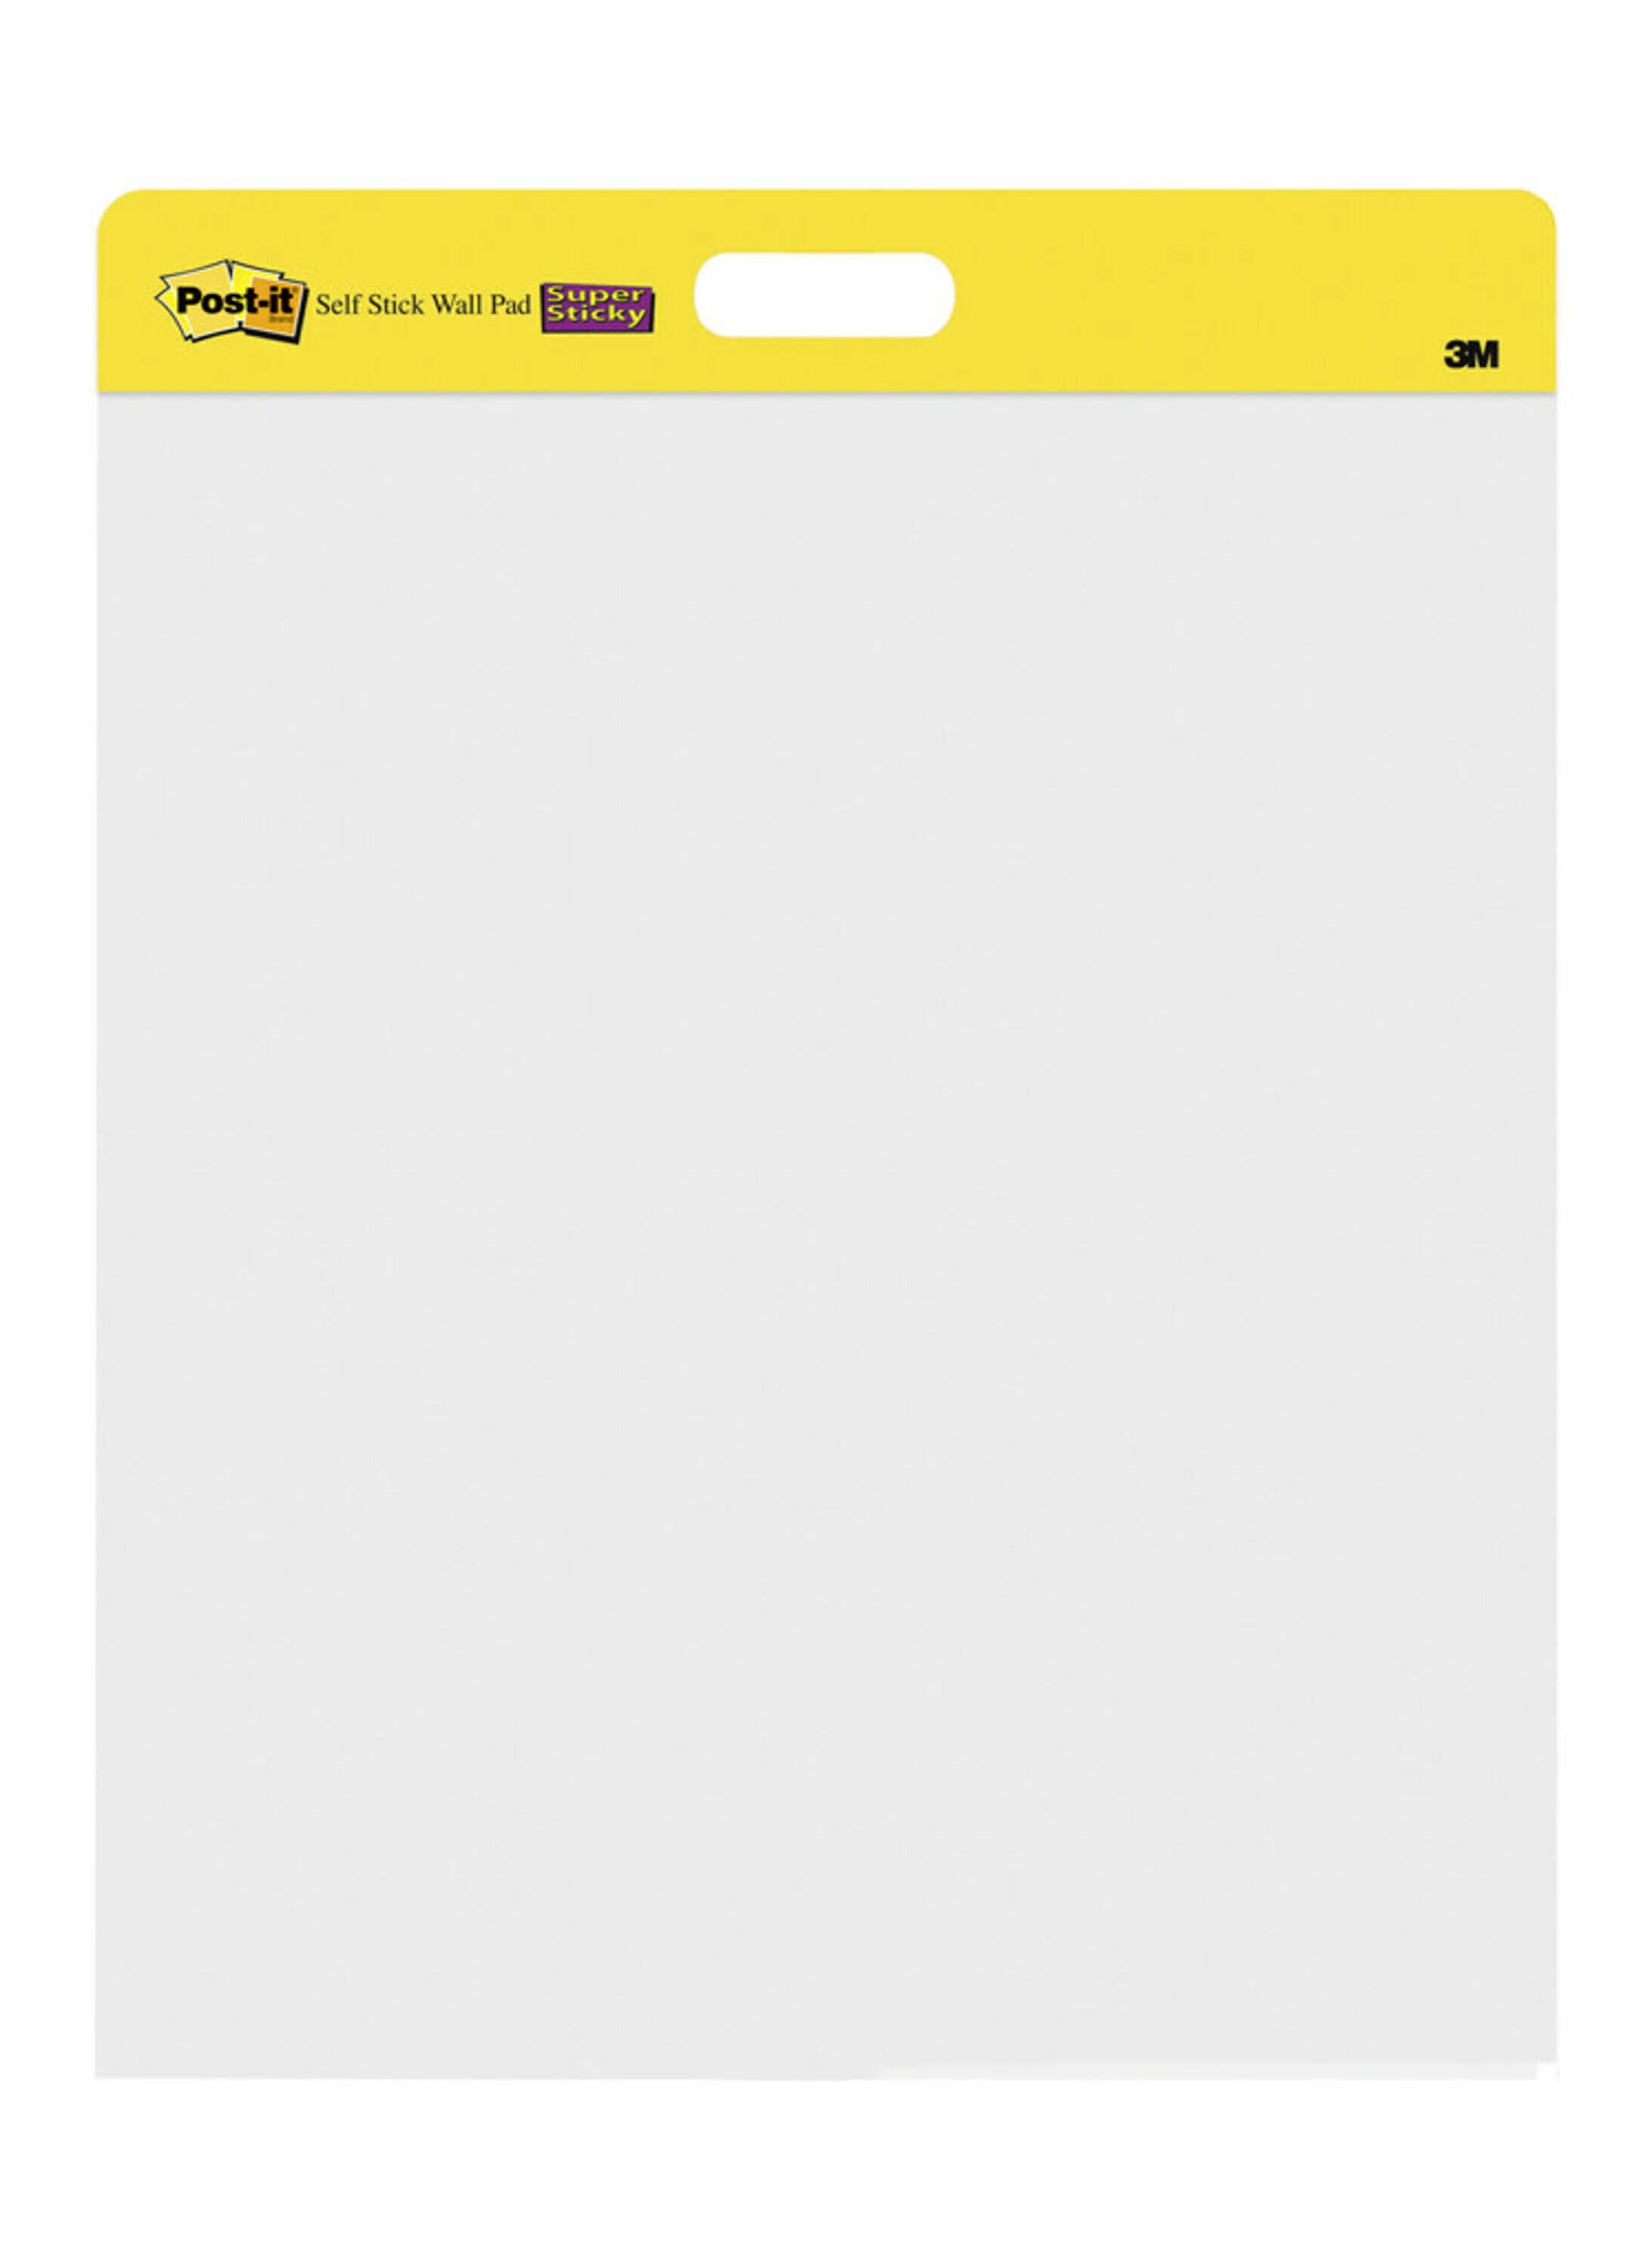 Post-it Wall Pad Easel Pad w/ Bonus Command Strips, 20 x 23, 2